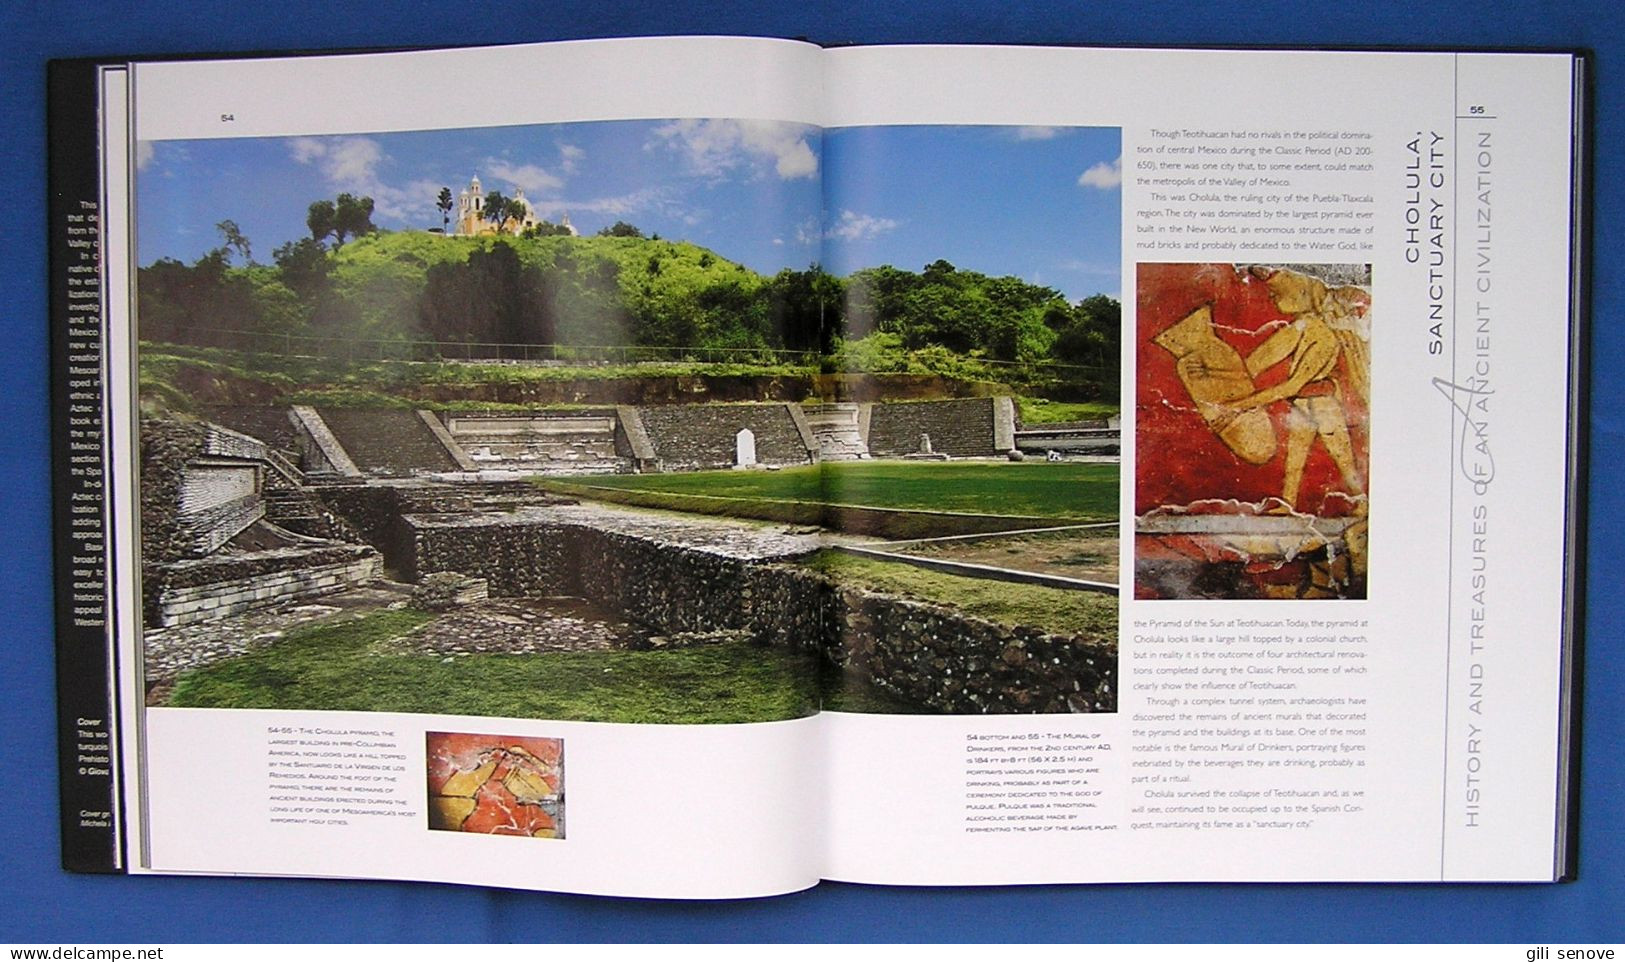 The Aztecs: History And Treasures Of An Ancient Civilization 2007 - Schone Kunsten